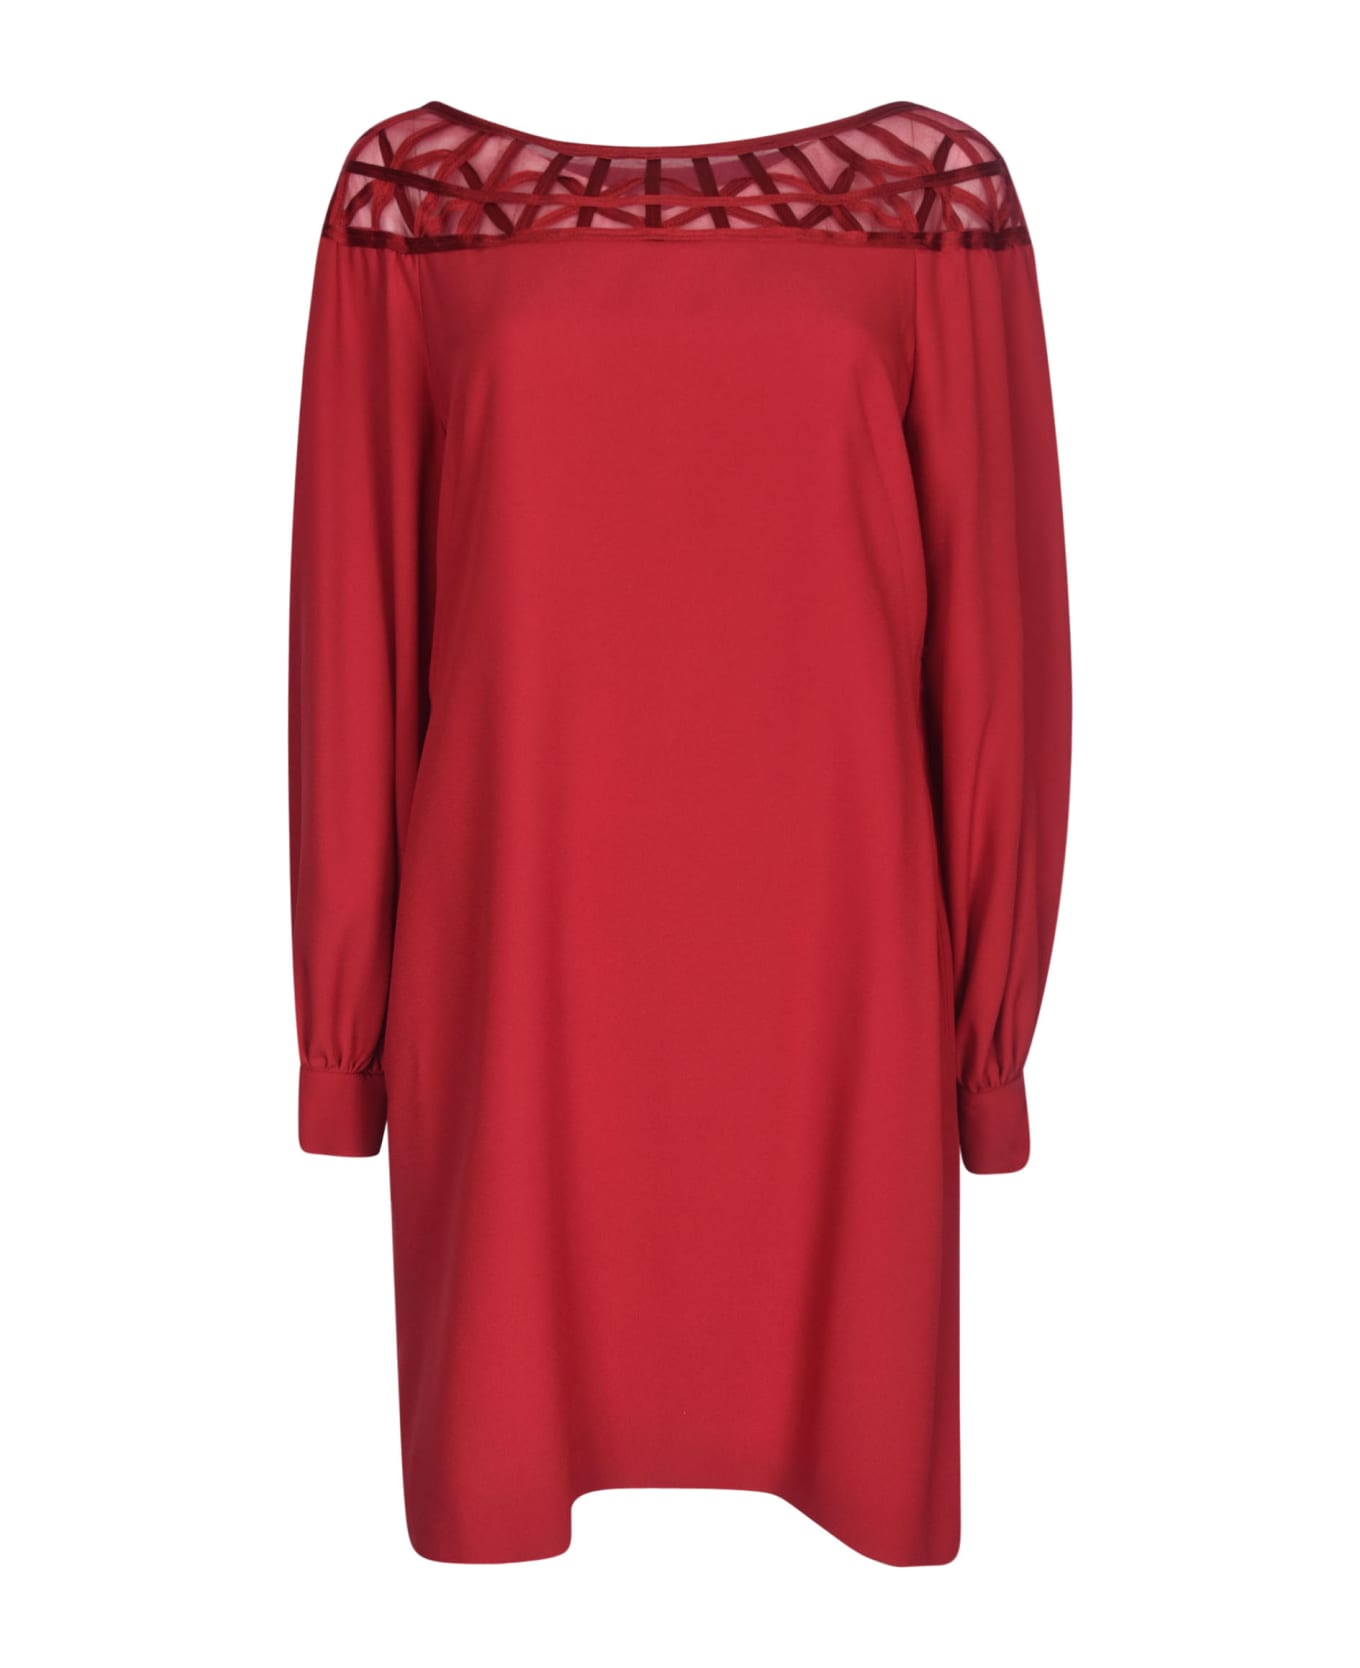 Alberta Ferretti Lace Panel Patterned Long-sleeved Dress - Red